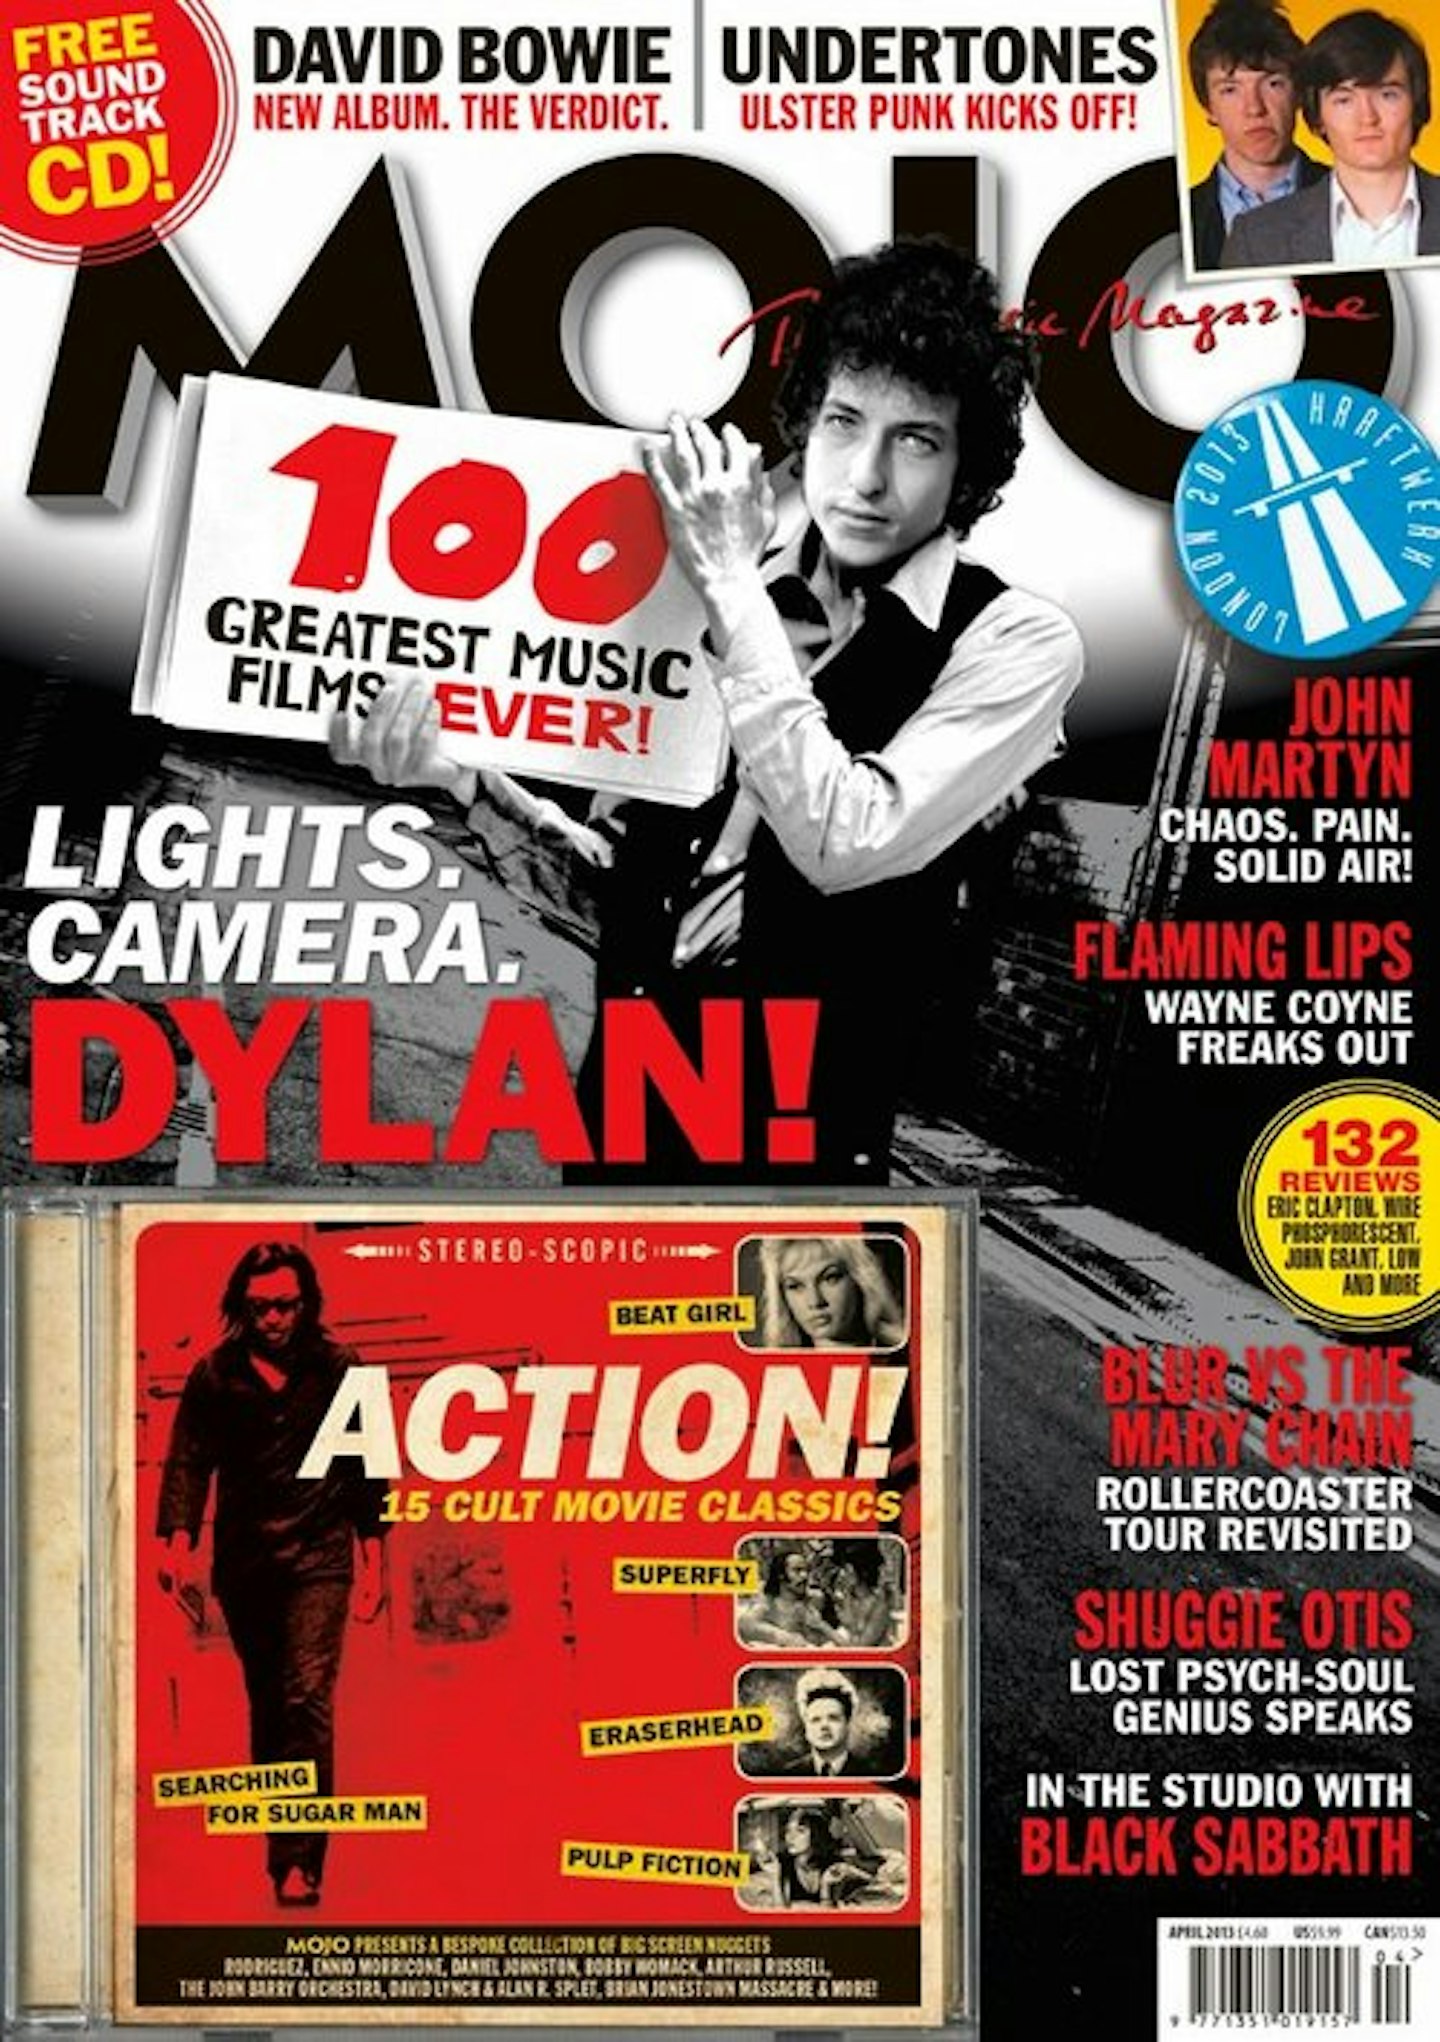 MOJO Issue 233 / April 2013